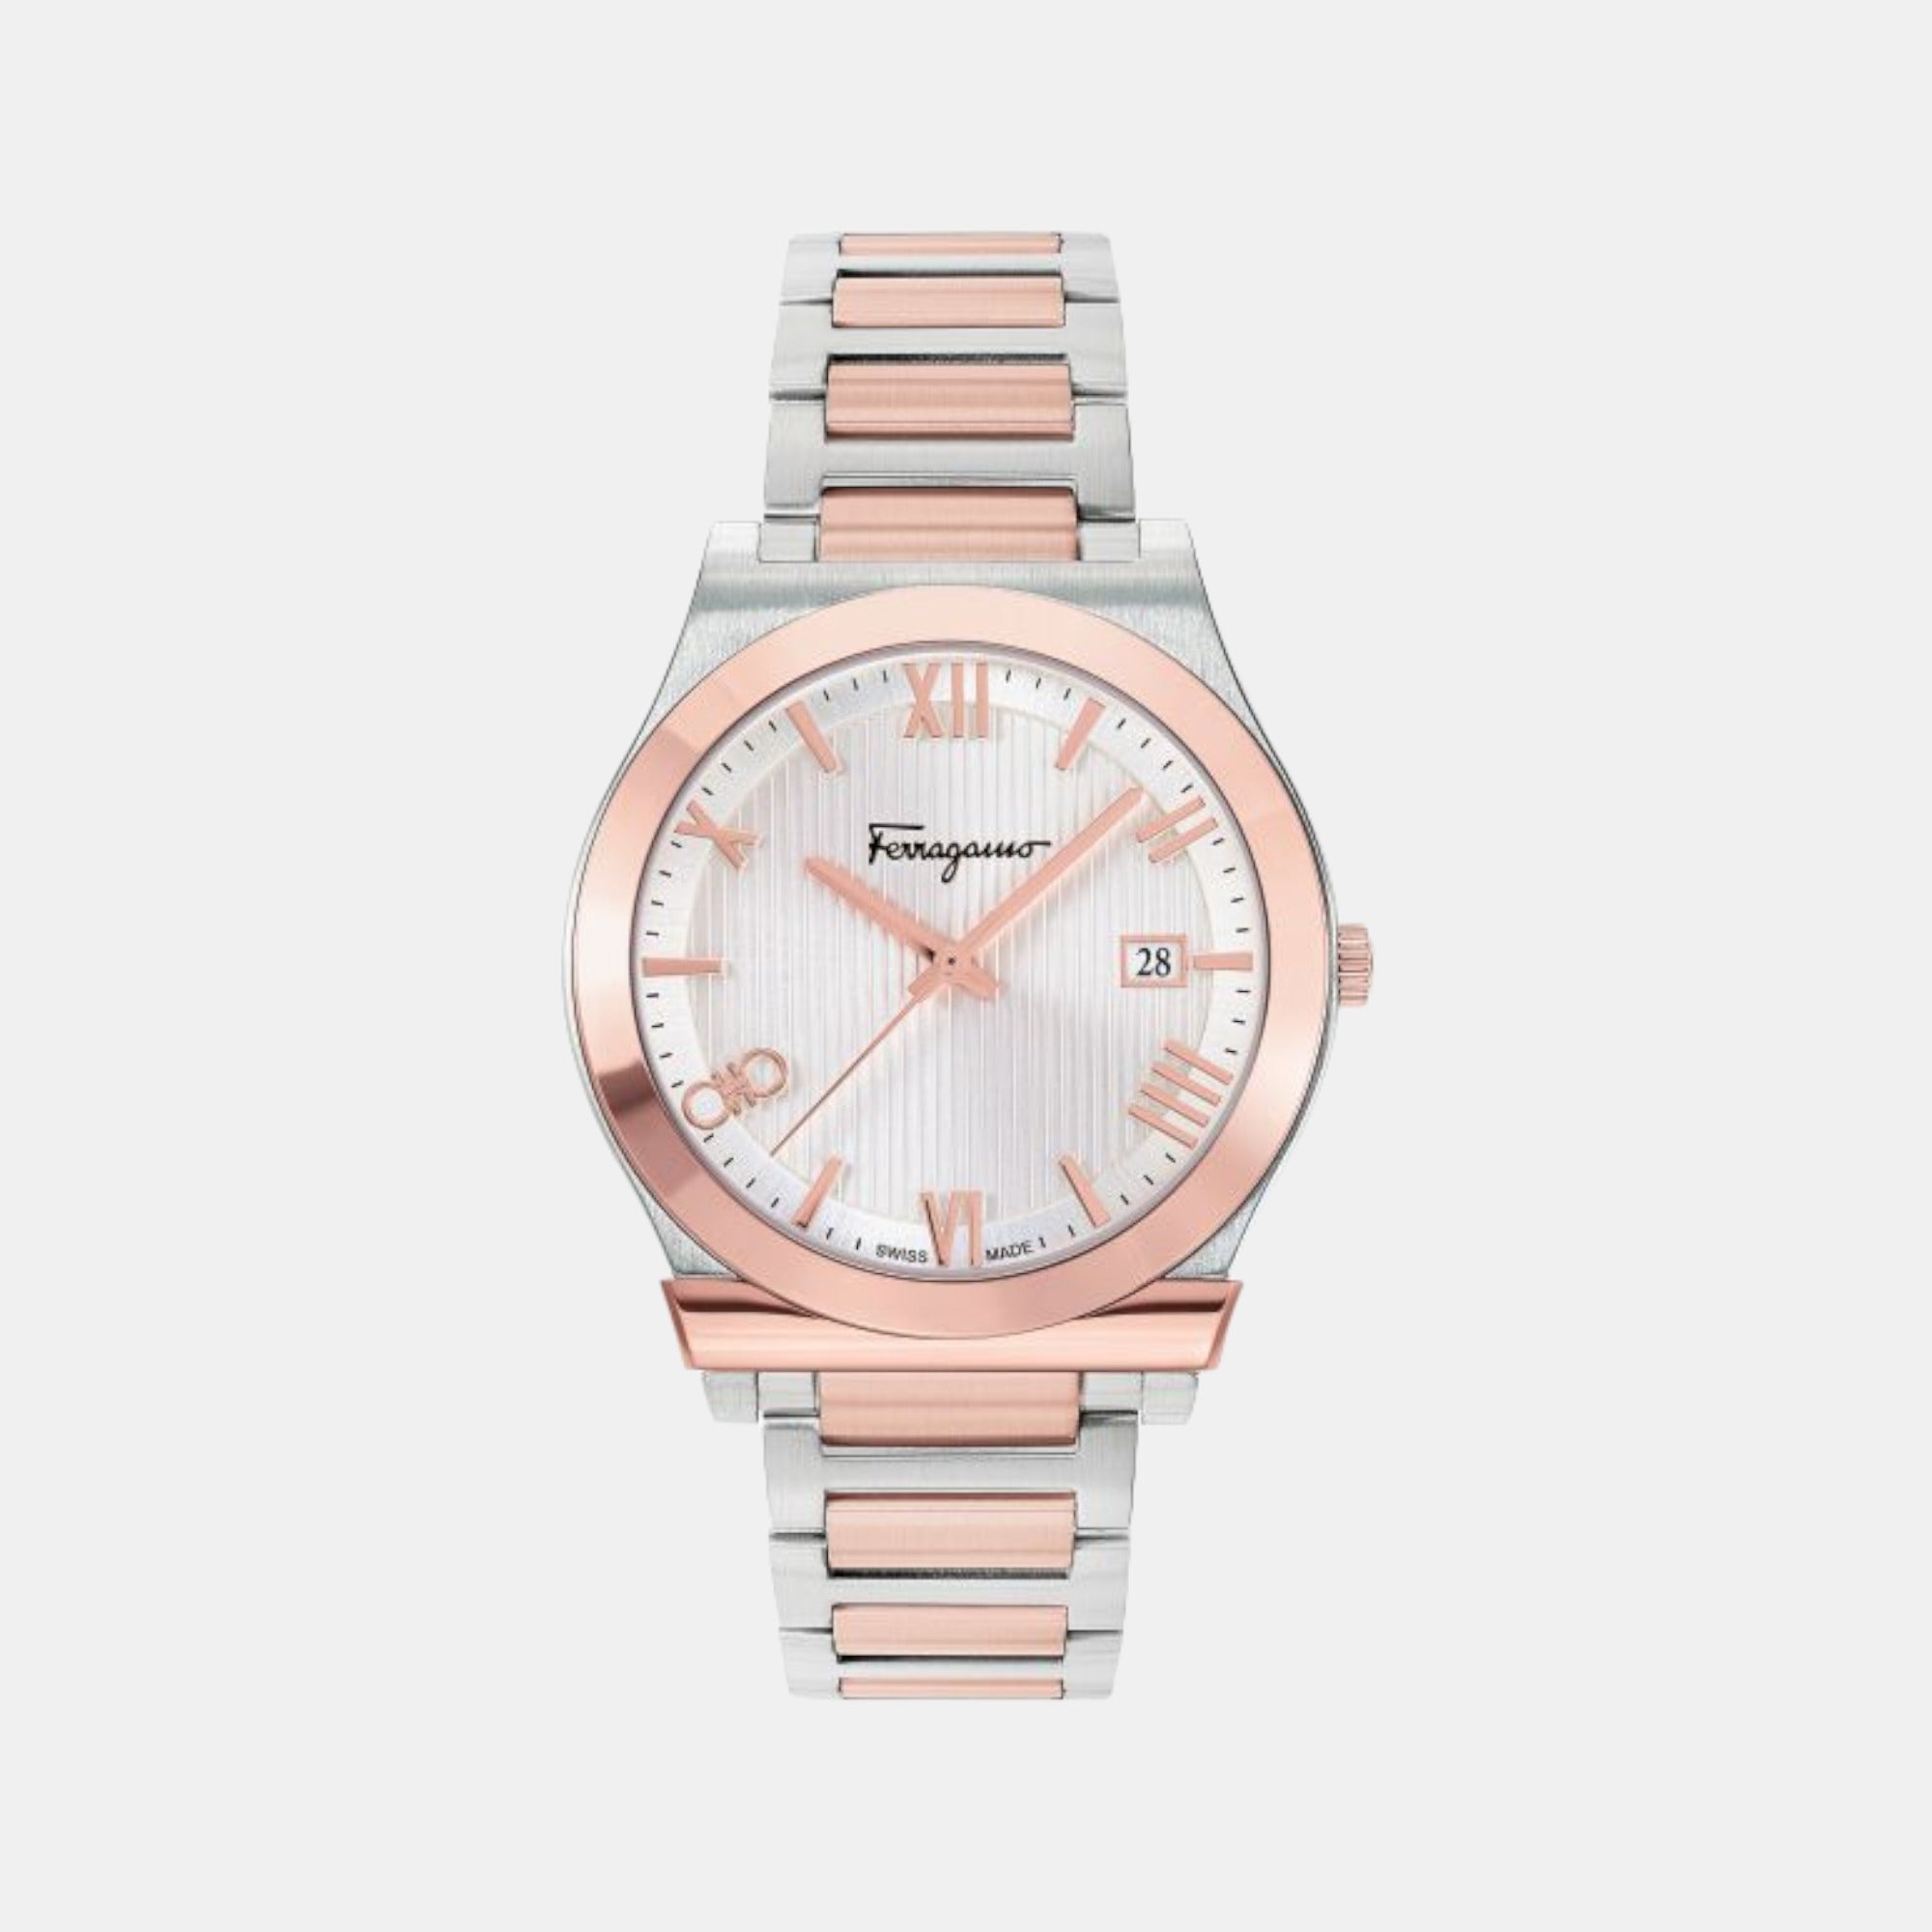 Salvatore Ferragamo Women's Analogue Wrist Watches | Stylicy